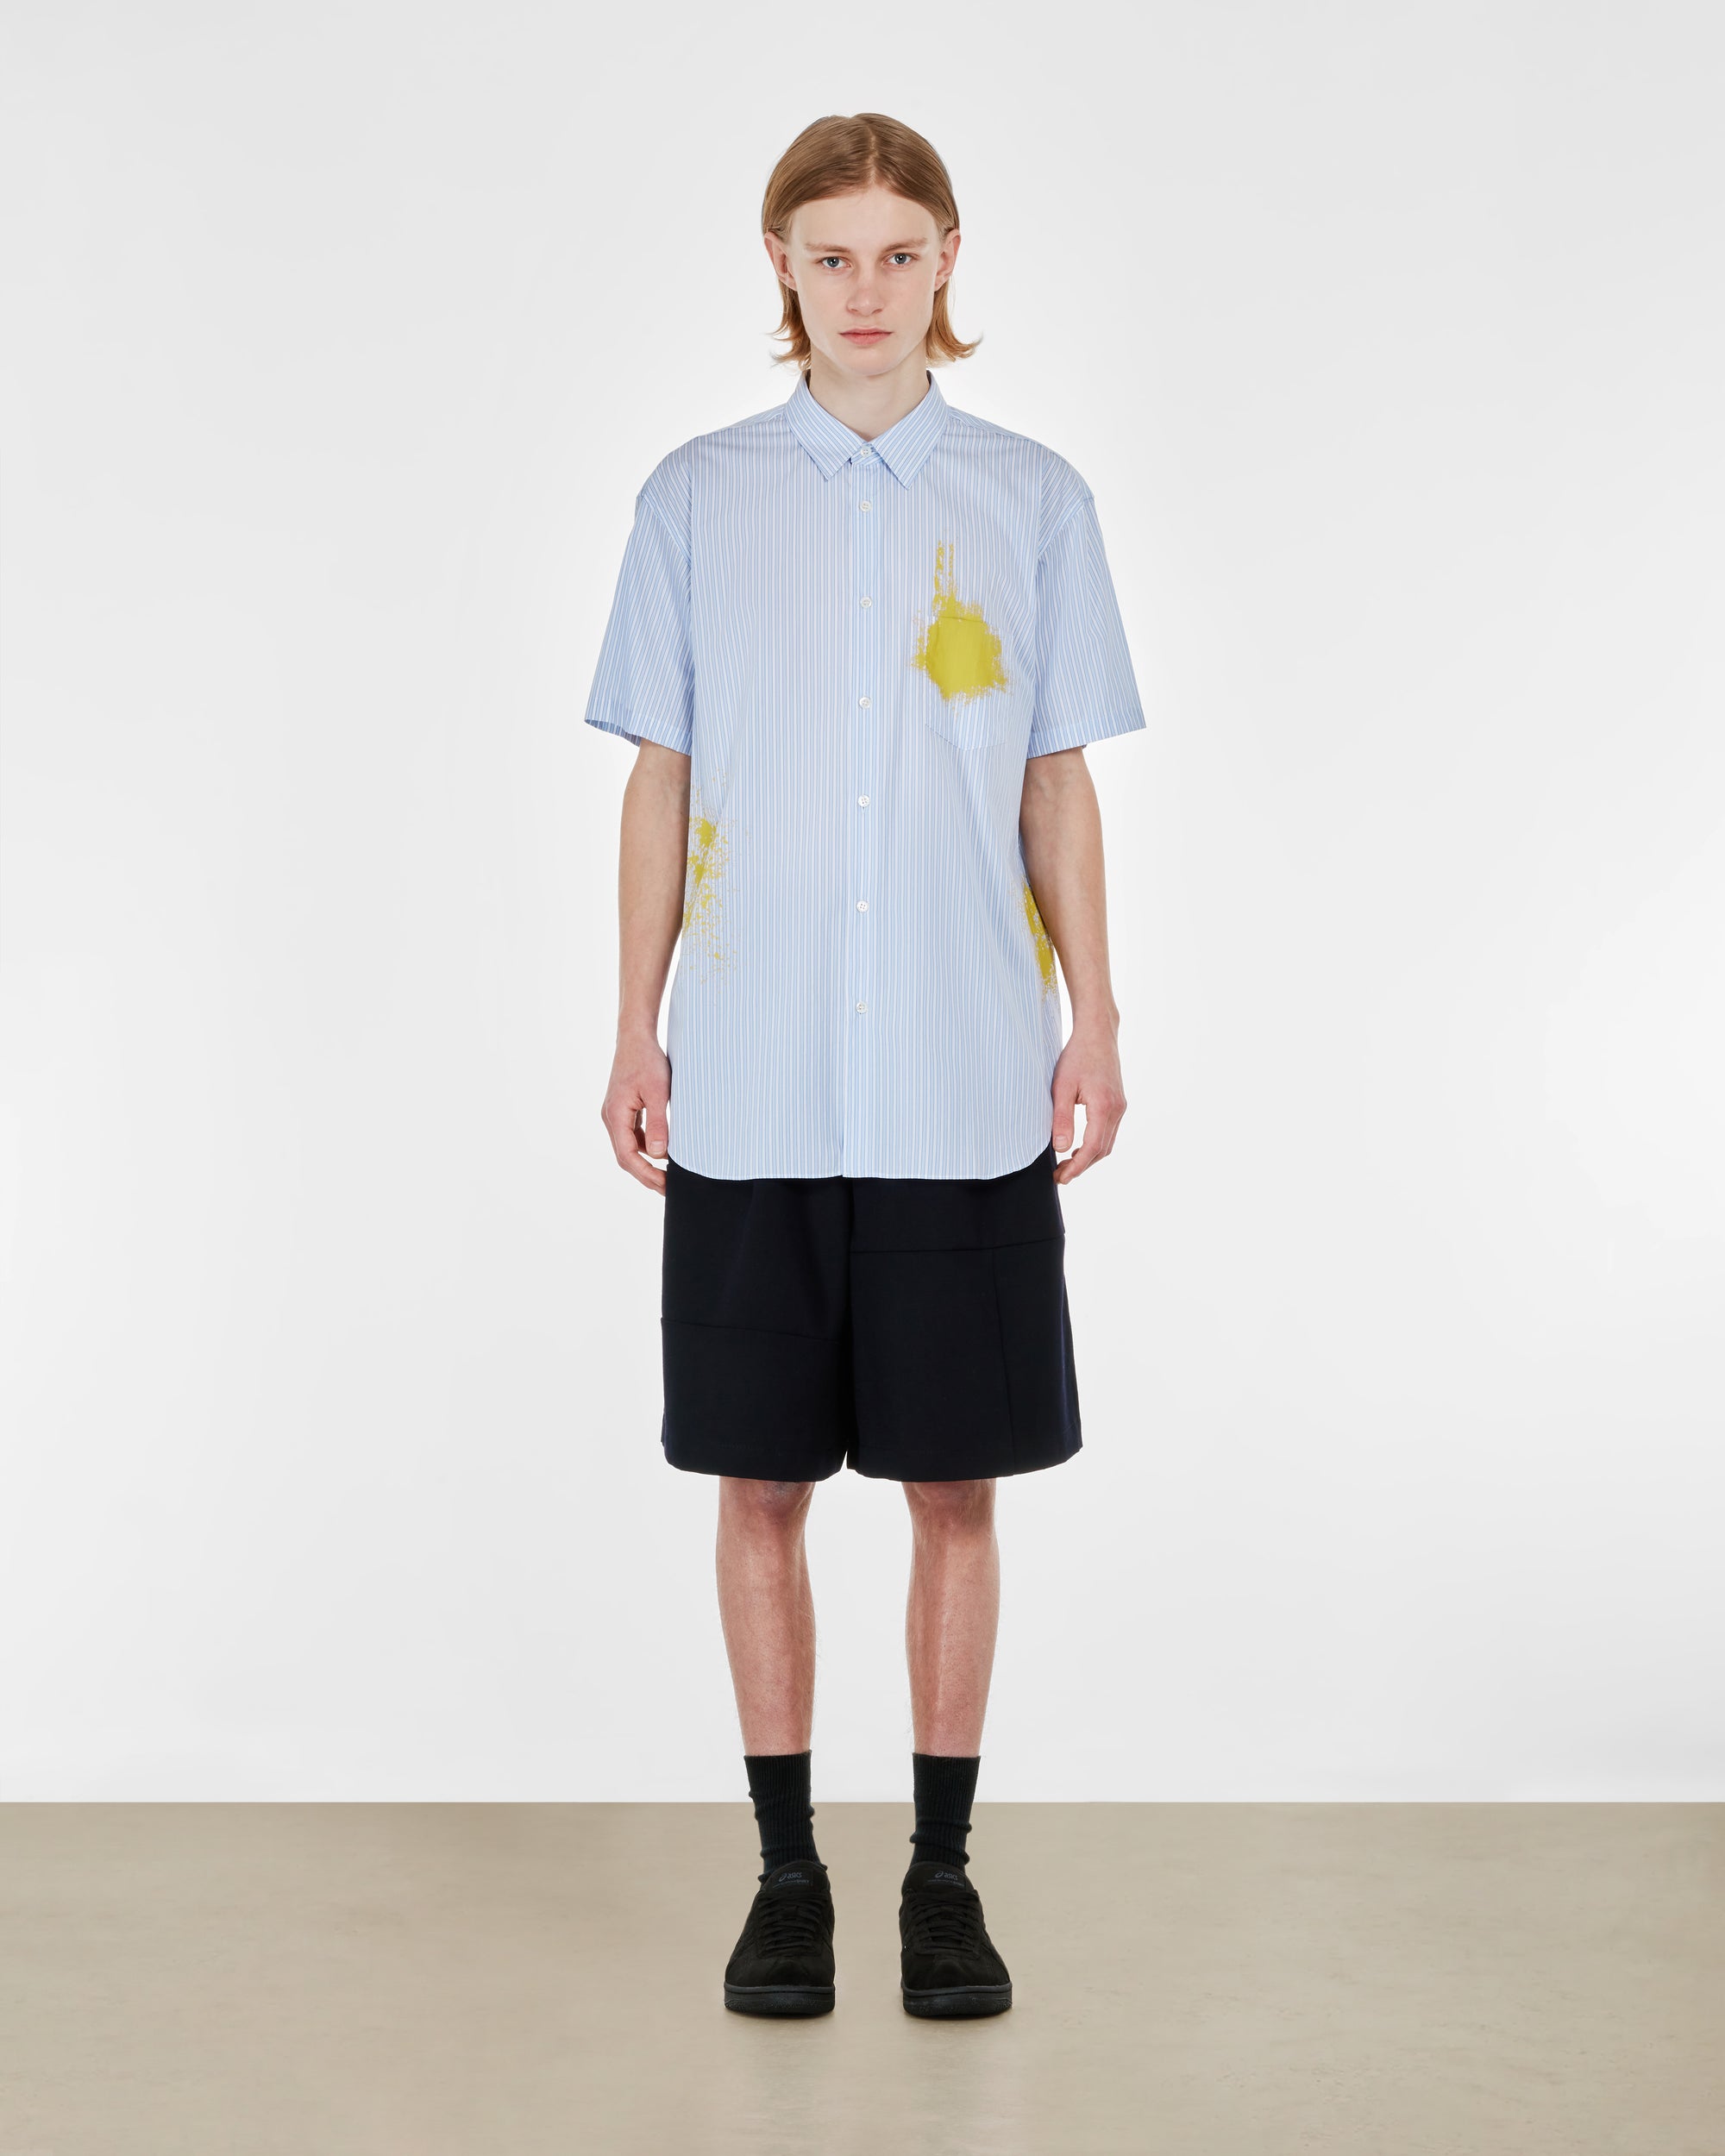 CDG Shirt - Men's Cotton Poplin Garment Printed Short Sleeve Shirt - (Stripe) view 5